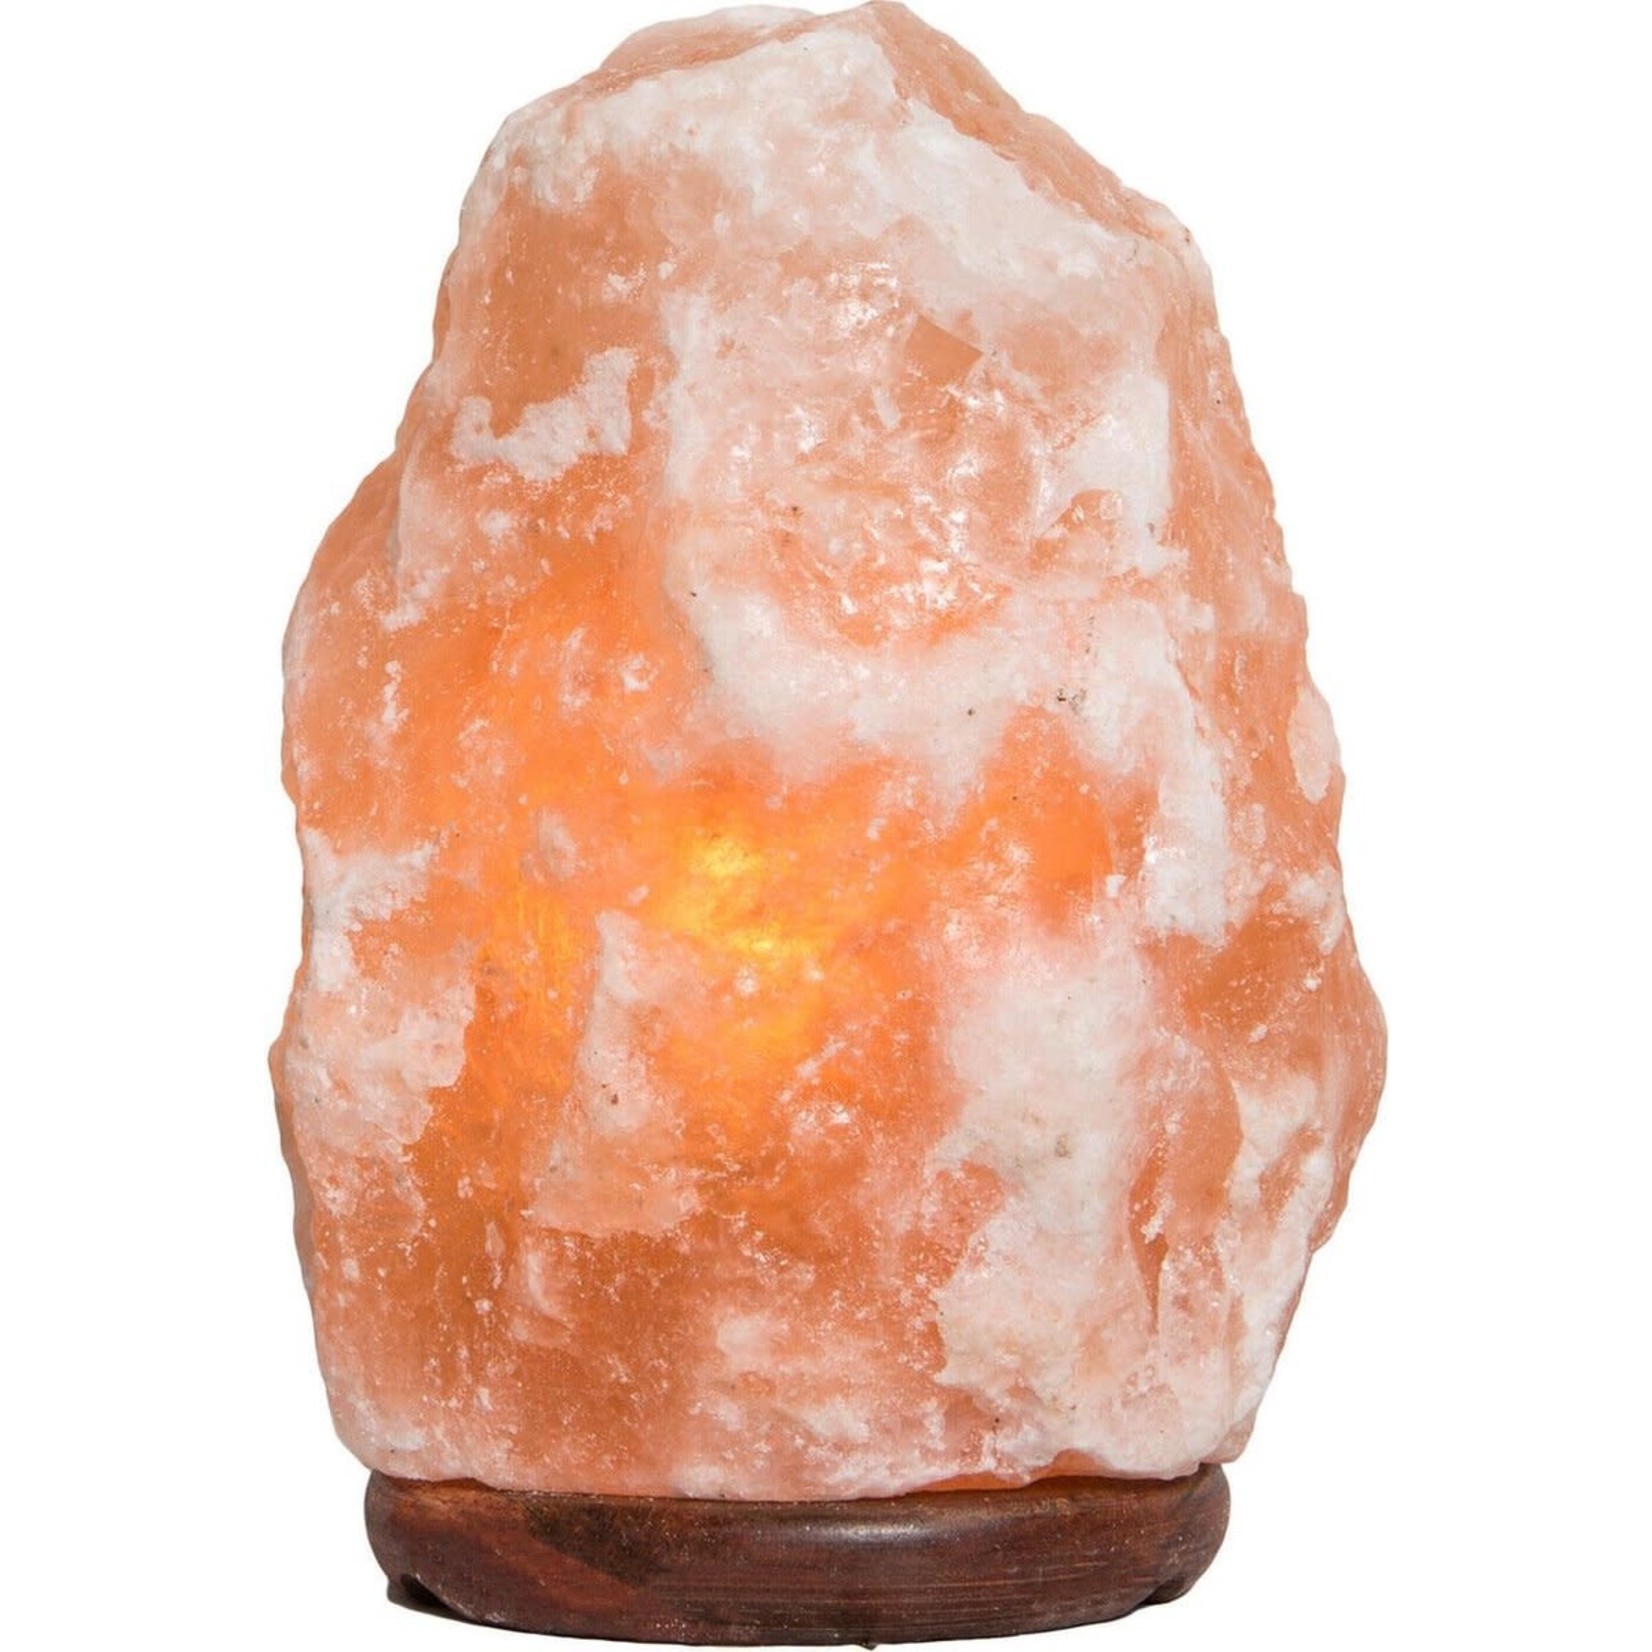 Himalaya Zoutlamp Oranje/Roze 3-4 kg (zwart snoer)